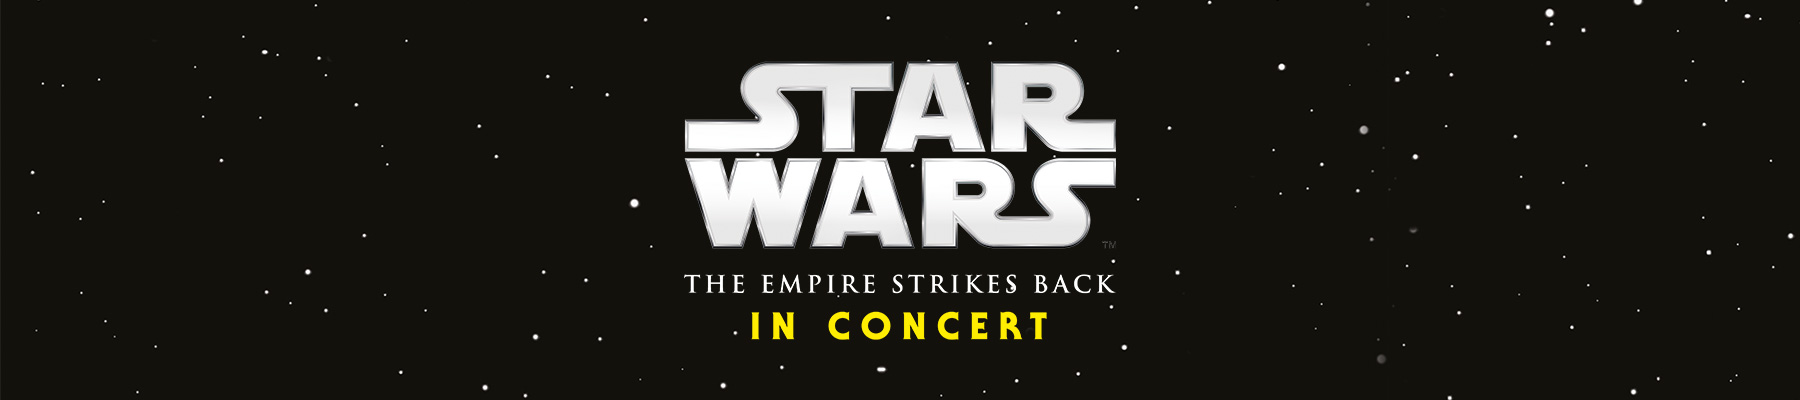 STAR WARS in Concert - The Empire strikes back - Titelfoto